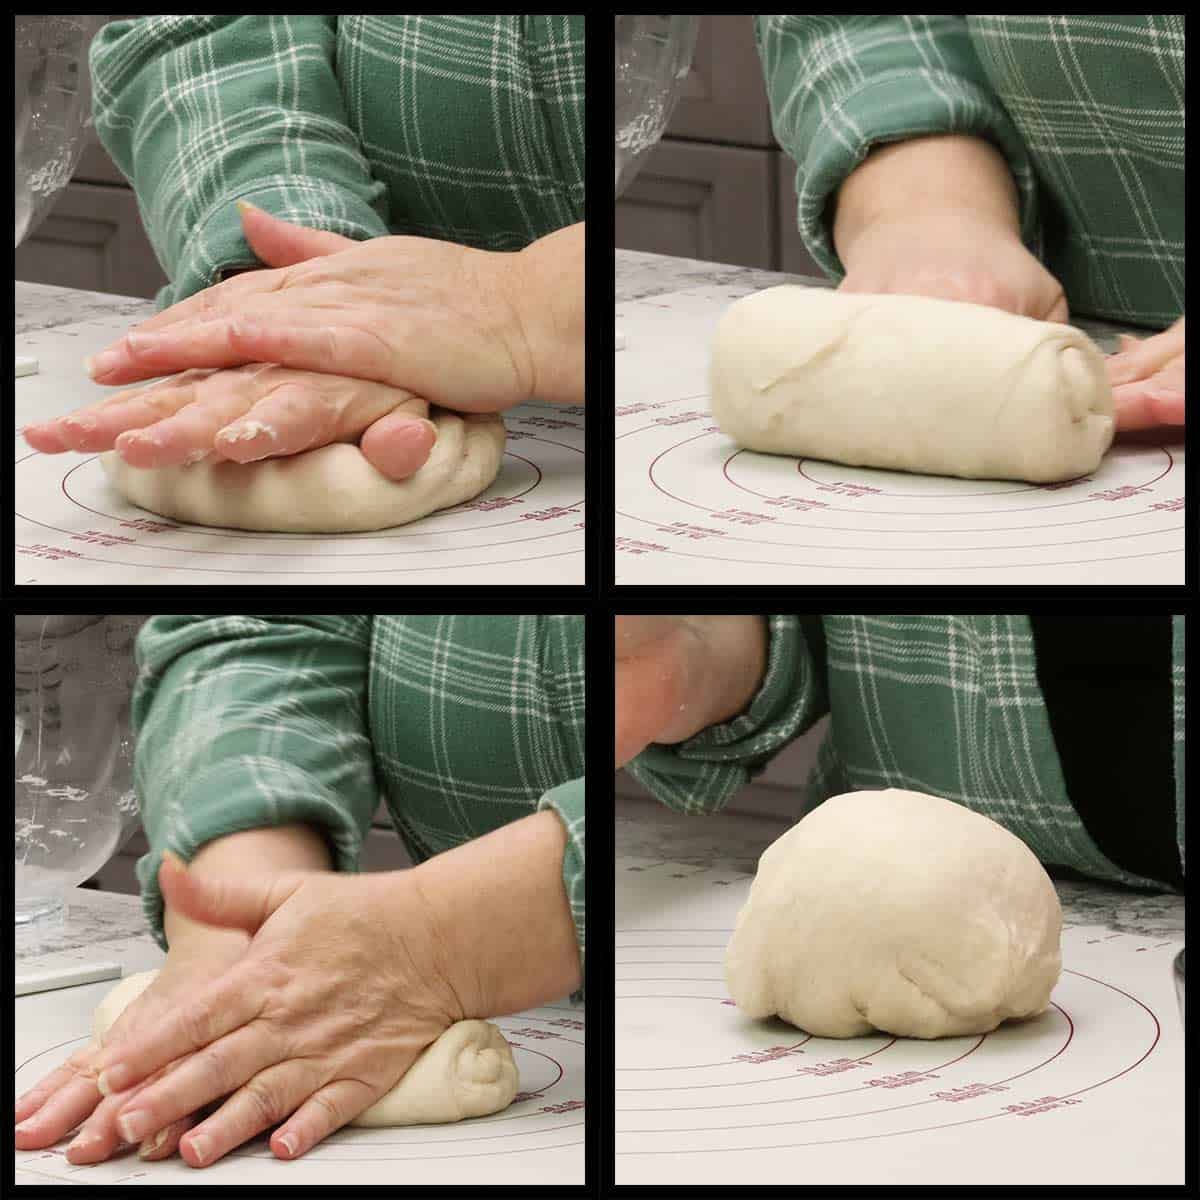 kneading the pretzel bun dough by hand.